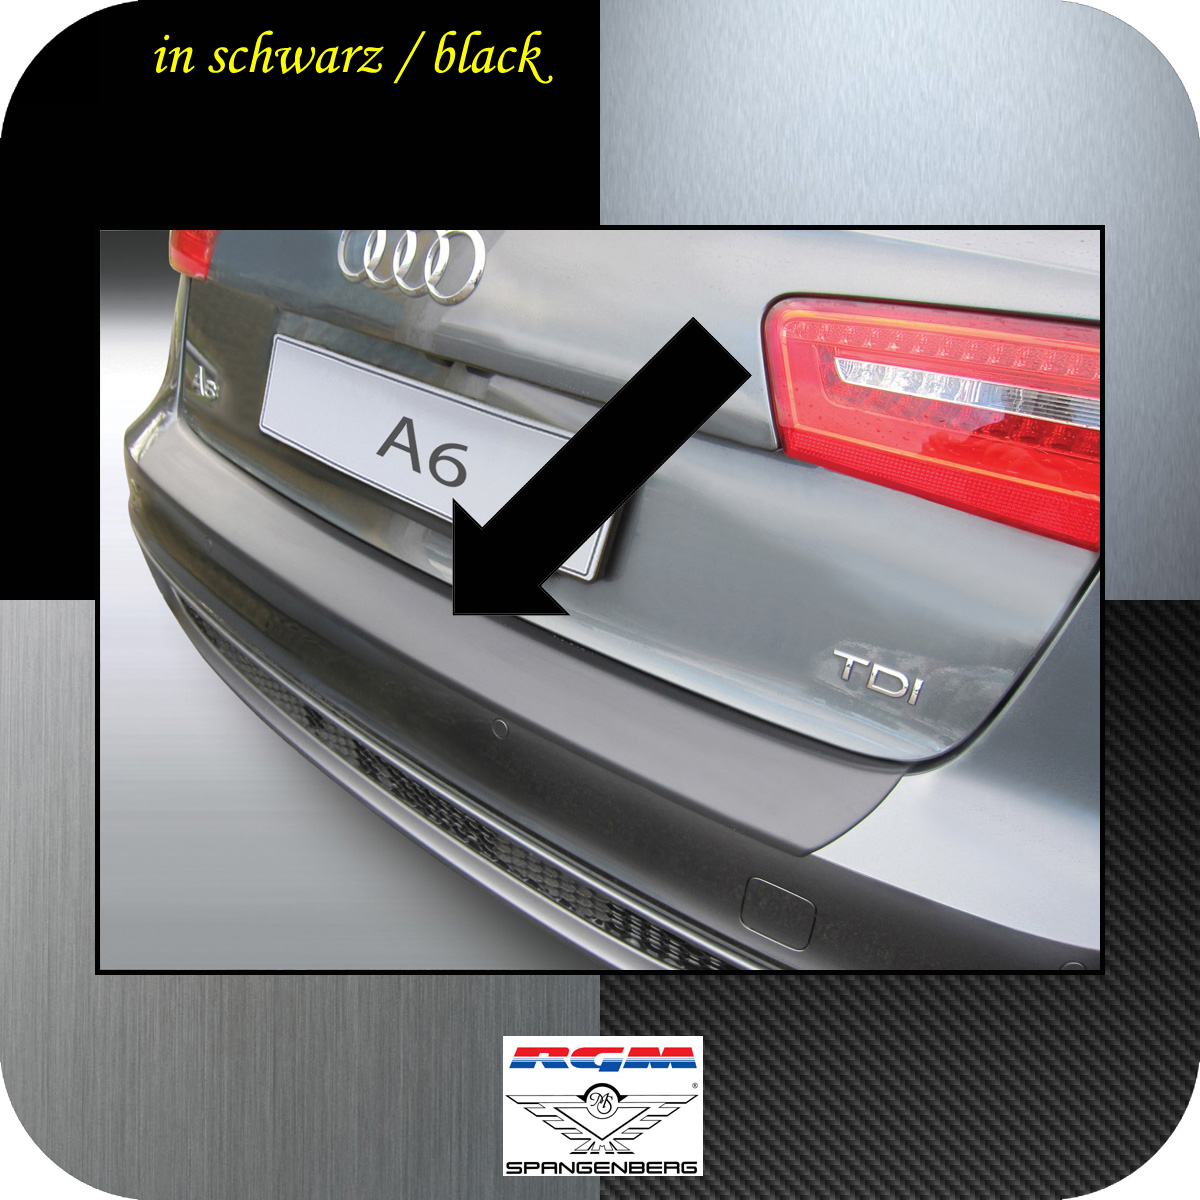 Ladekantenschutz schwarz Audi A6 C7 Avant Kombi vor Mopf 2011-2014 3500713